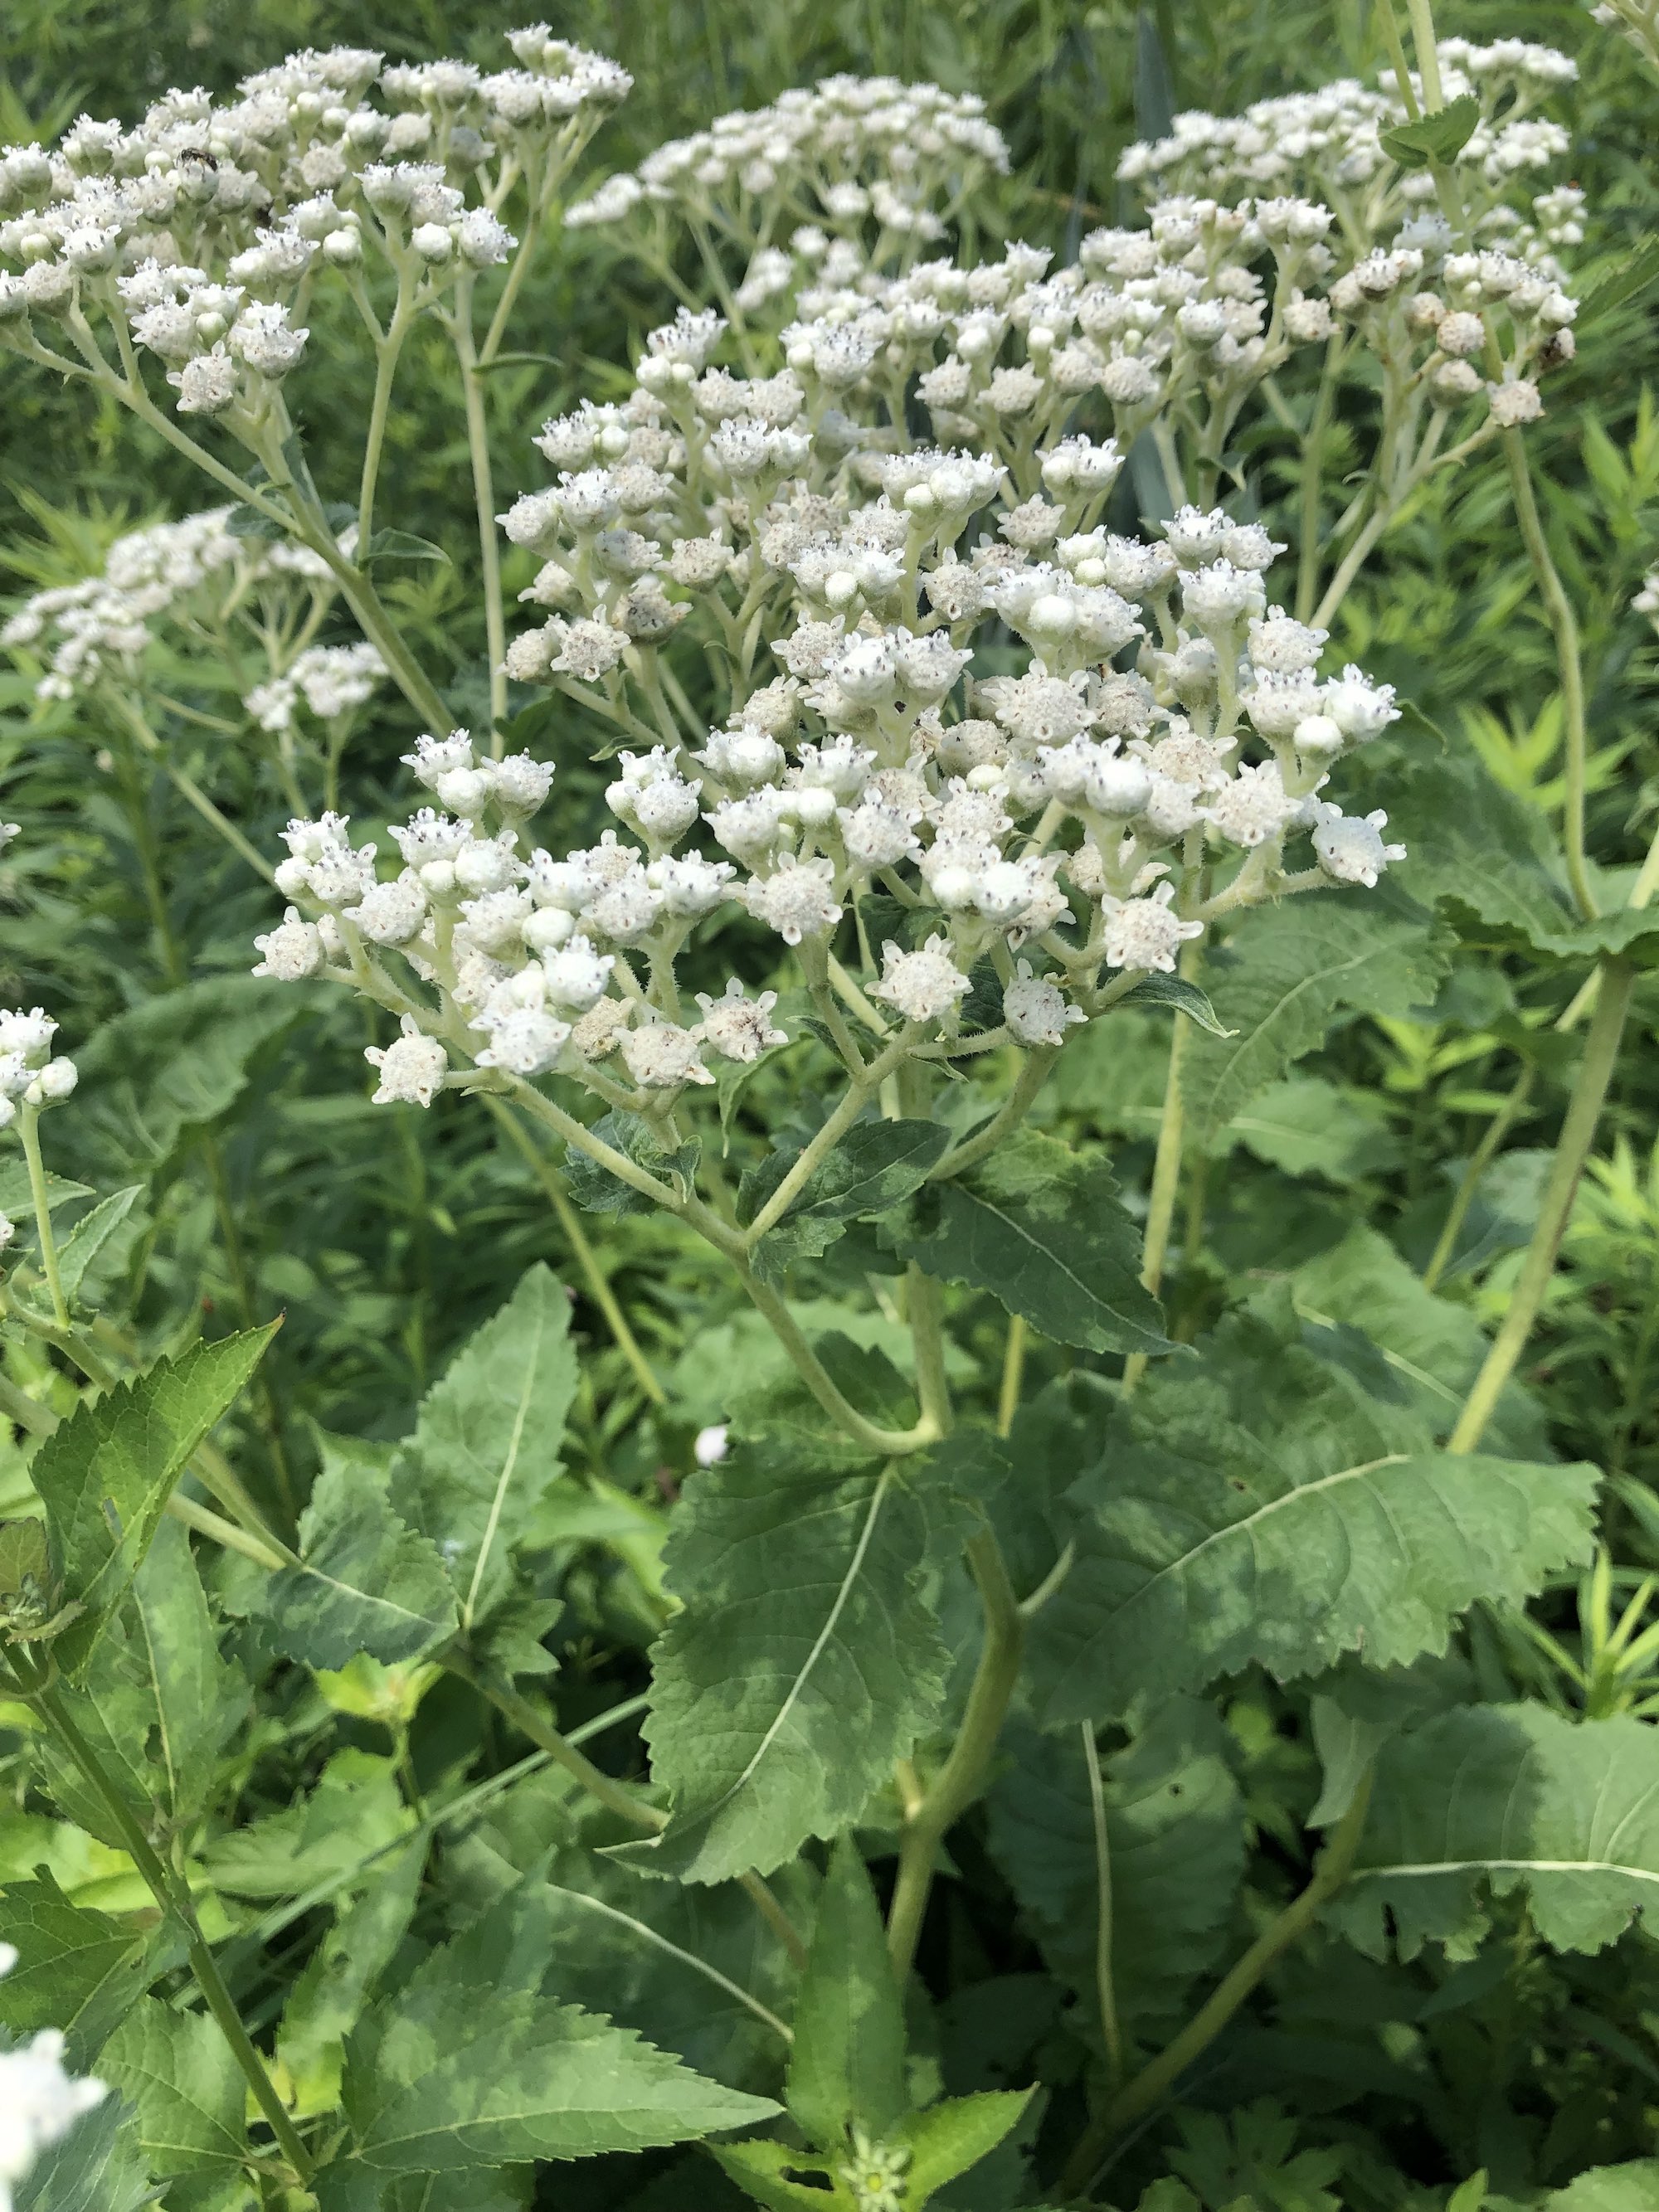 Wild Quinine in UW Arbortetum Native Gardens in Madison, Wisconsin on June 30, 2021.